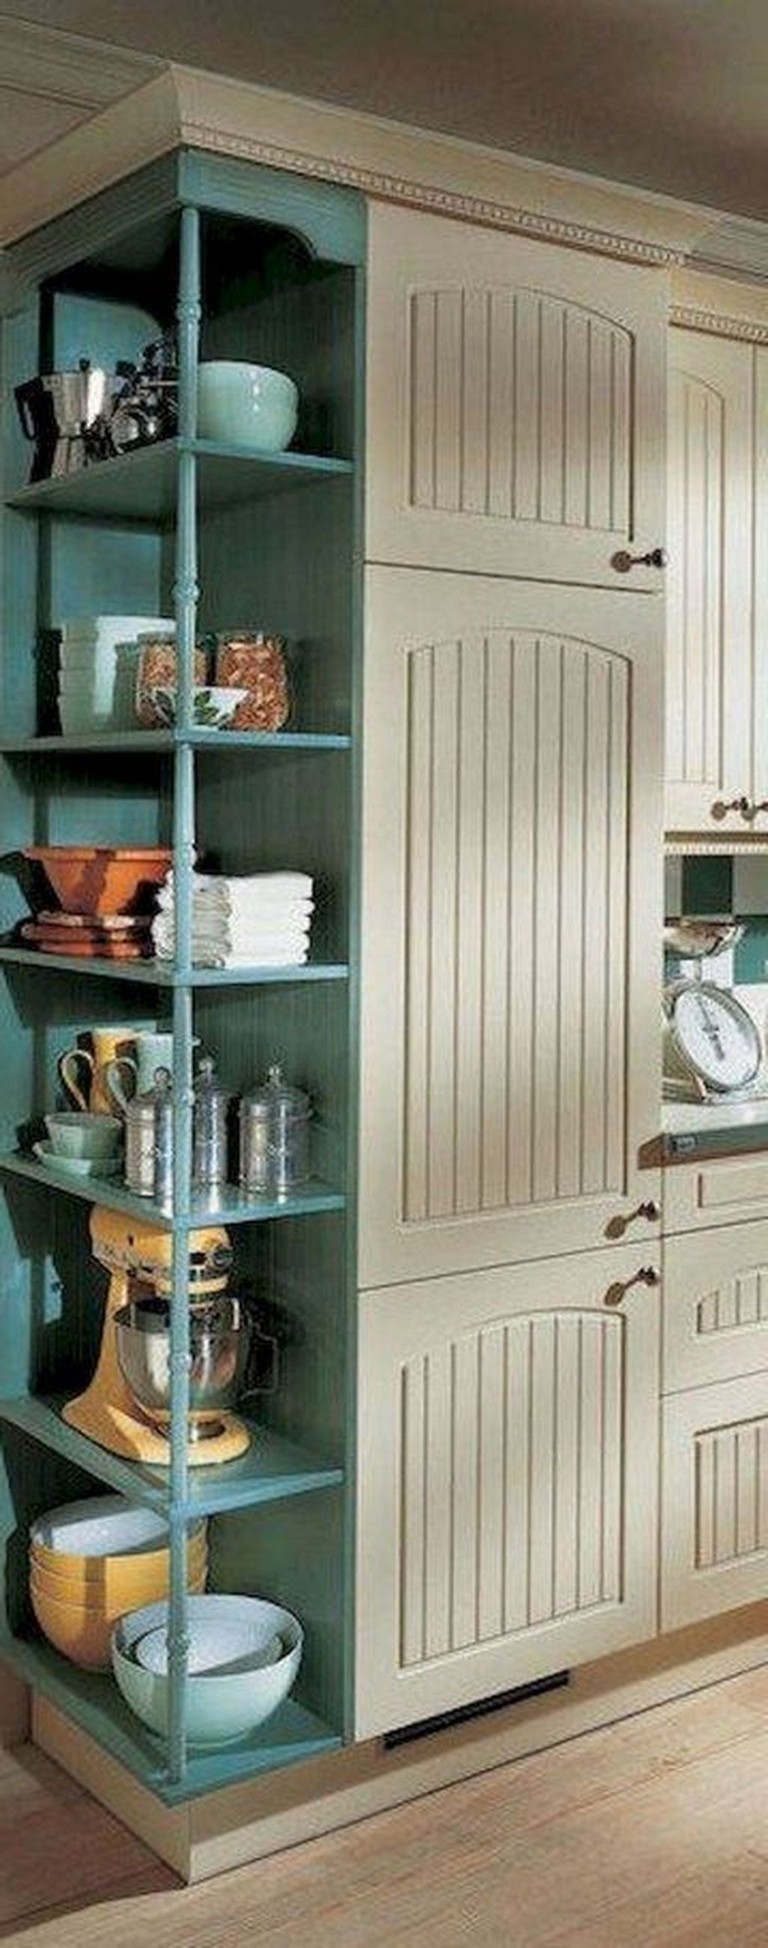 45+ Amazing Farmhouse Kitchen Storage Ideas Best For Designing Your ...